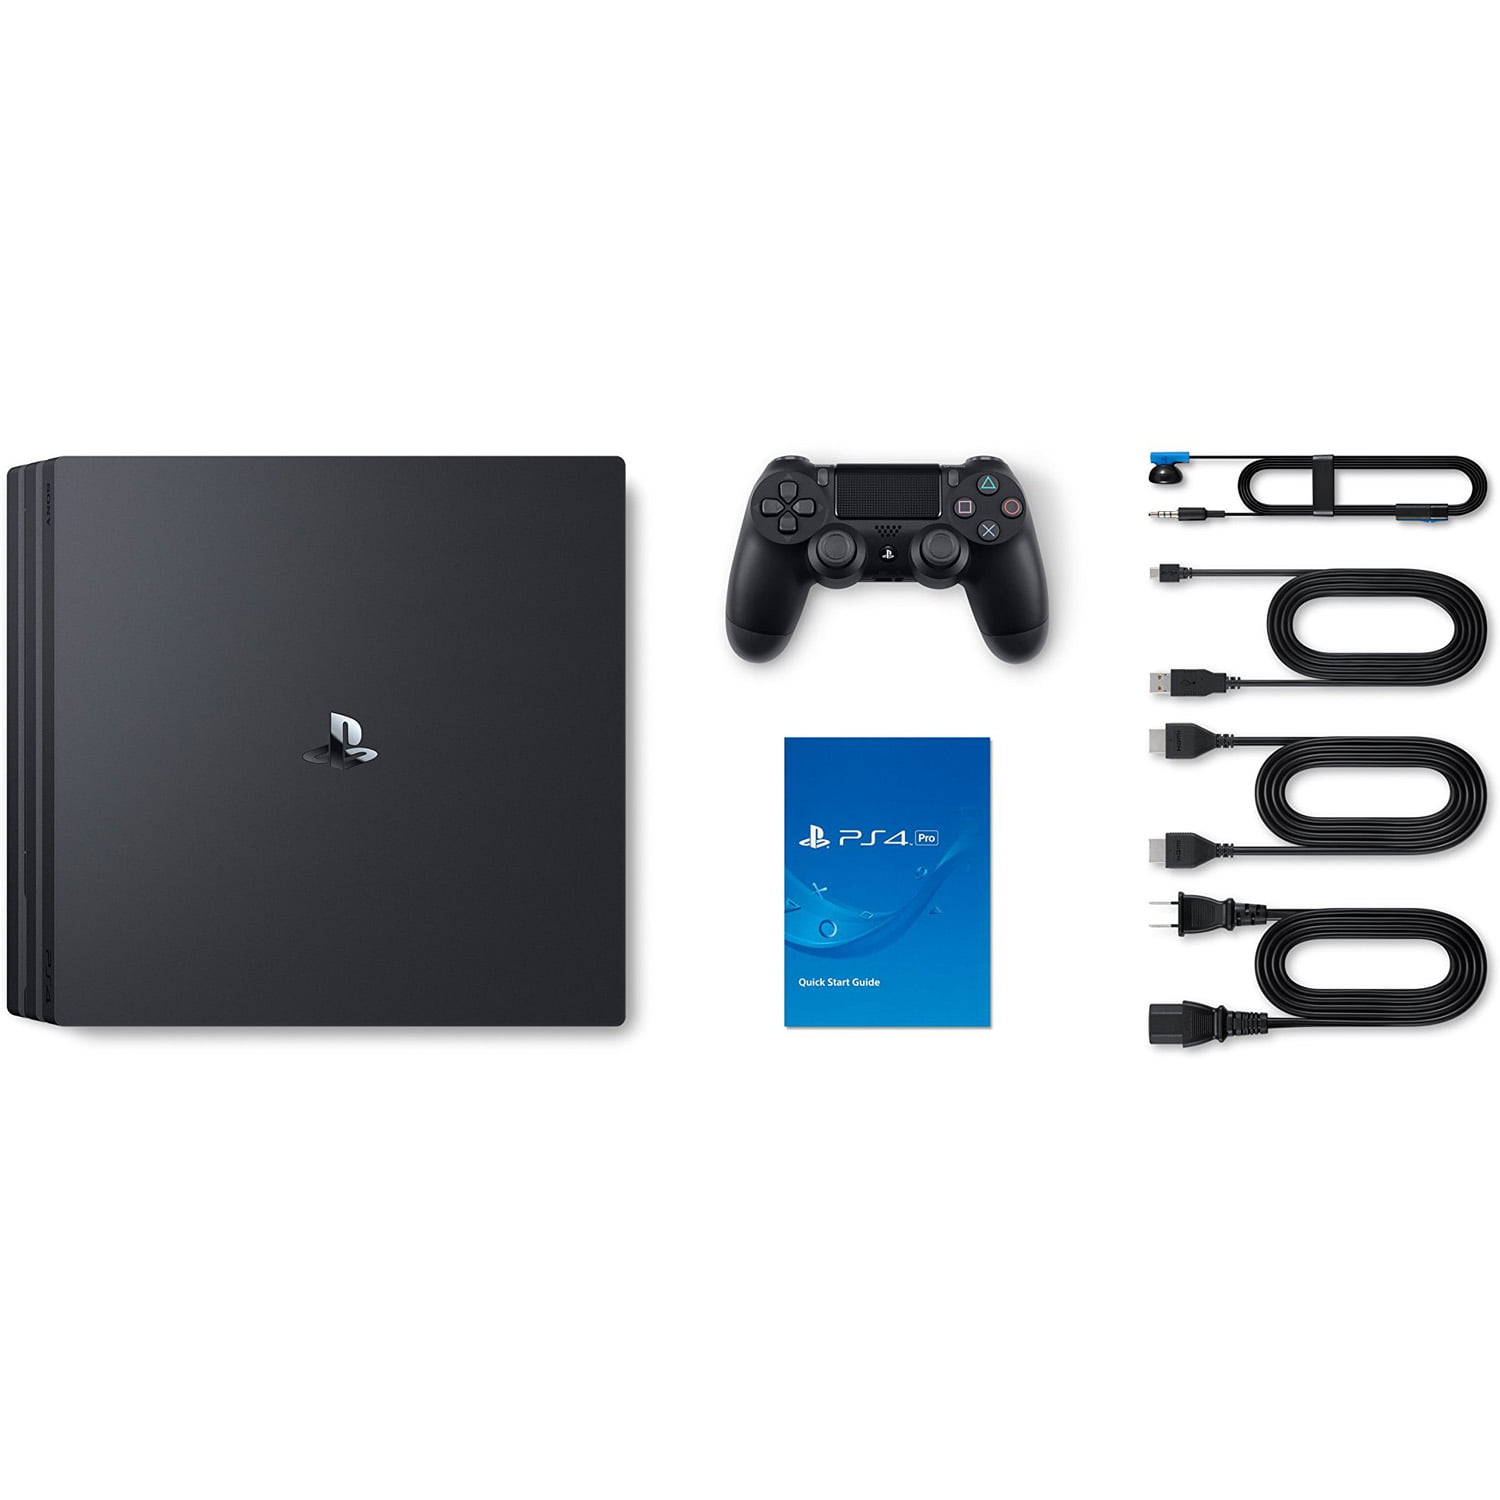 Carretilla Arco iris limpiador Sony PlayStation 4 Pro 1TB Gaming Console, Black, CUH-7115 - Walmart.com